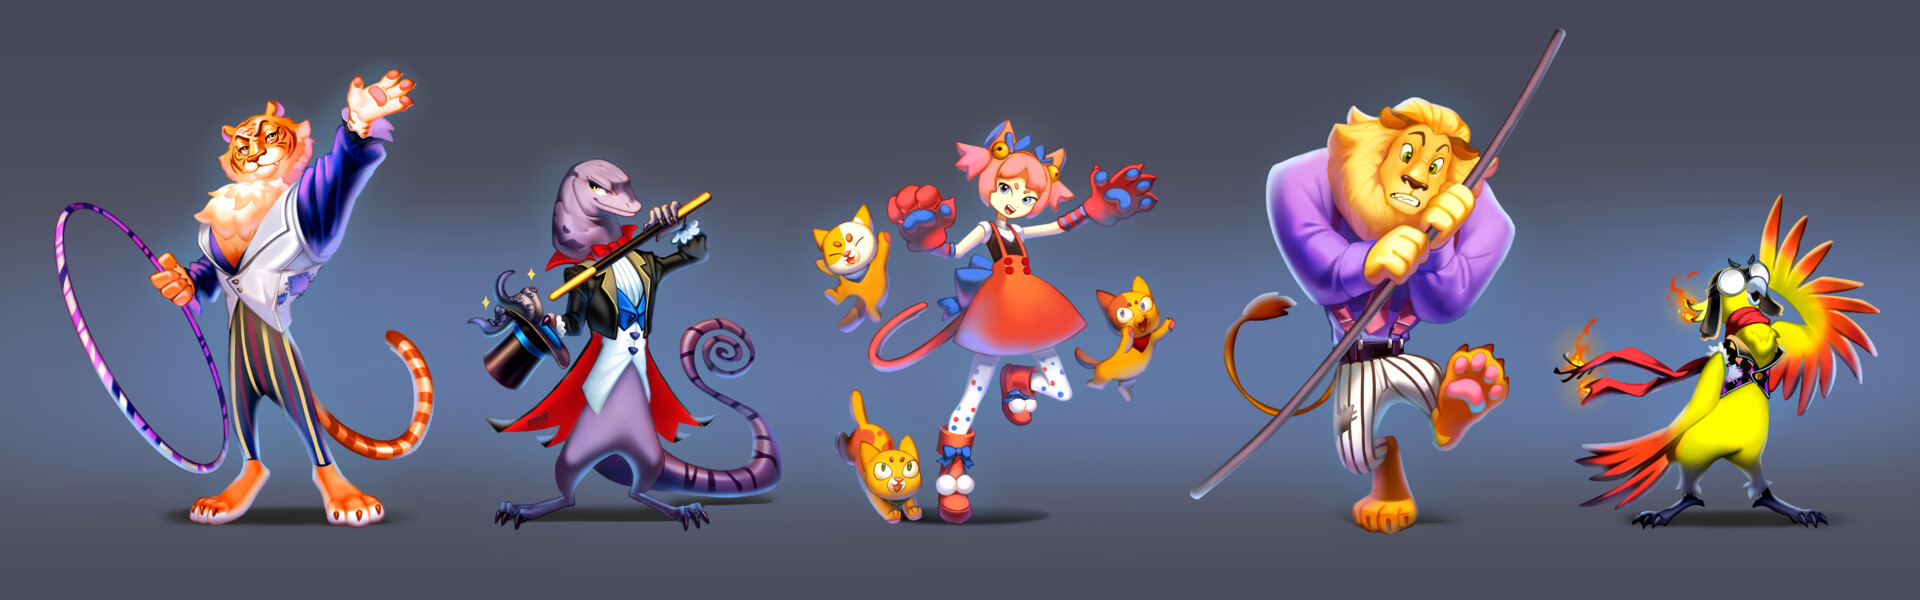 ArtStation - Circus crew / Character design